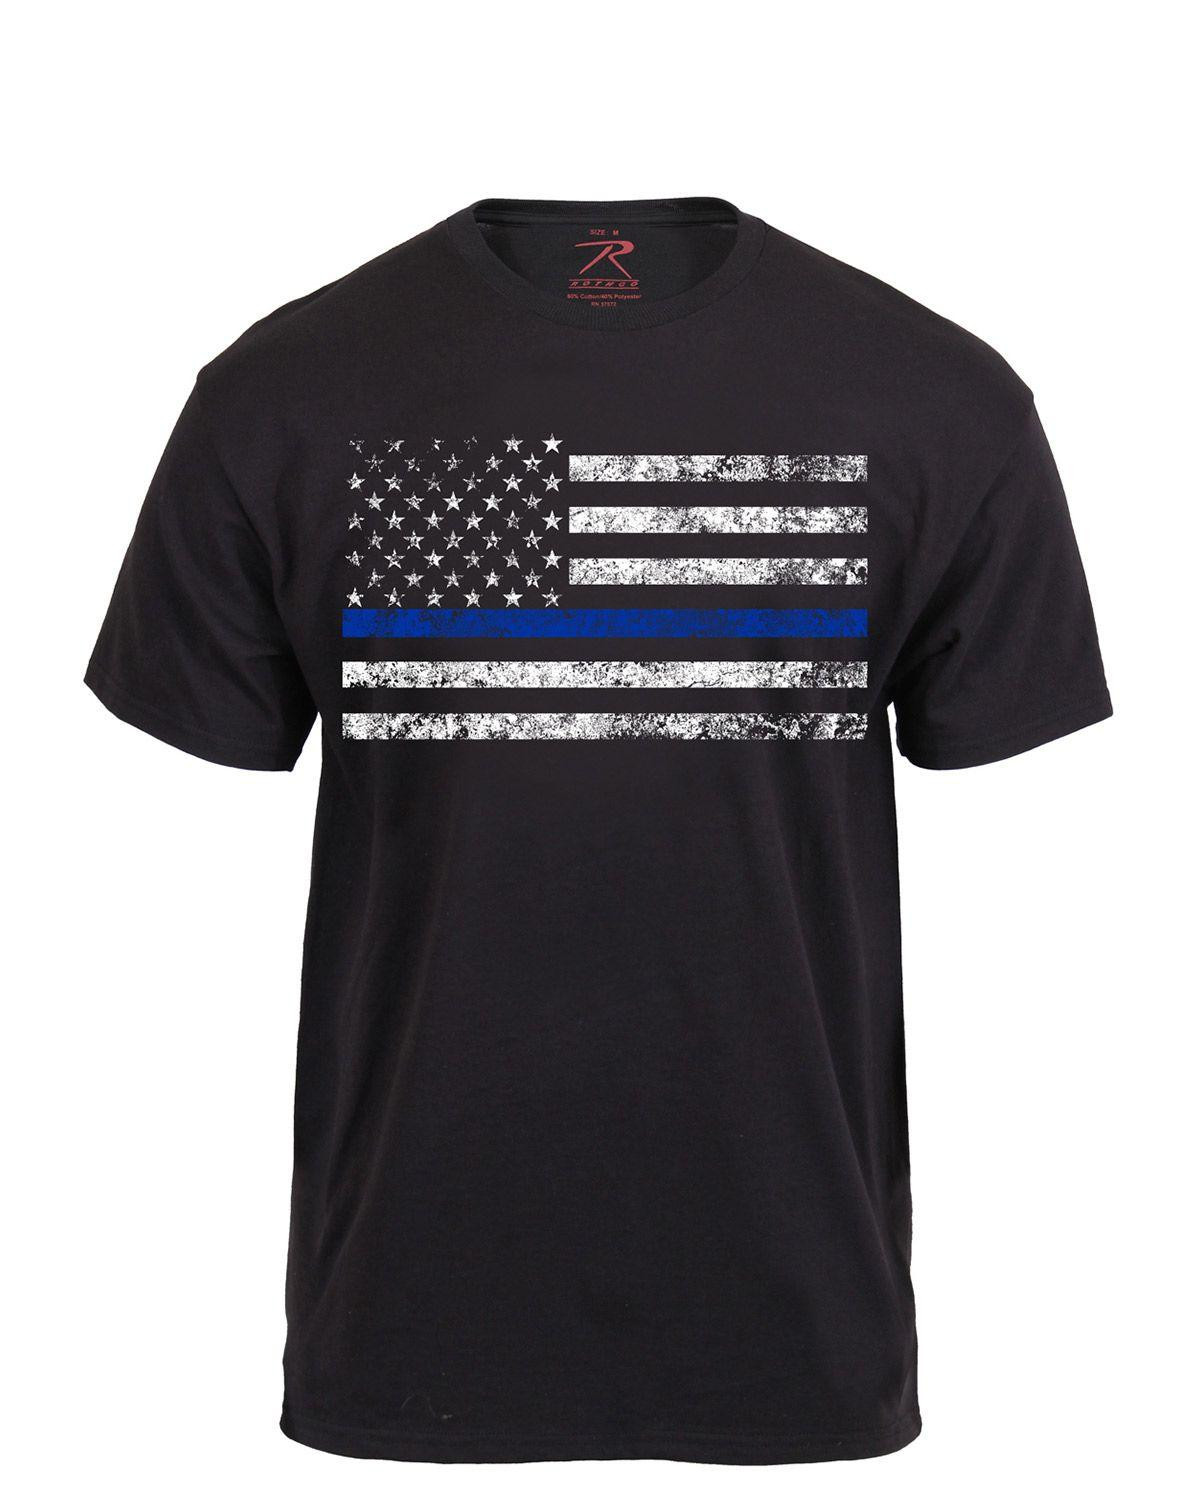 Rothco T-Shirt - Thin Blue Line (Sort, S)